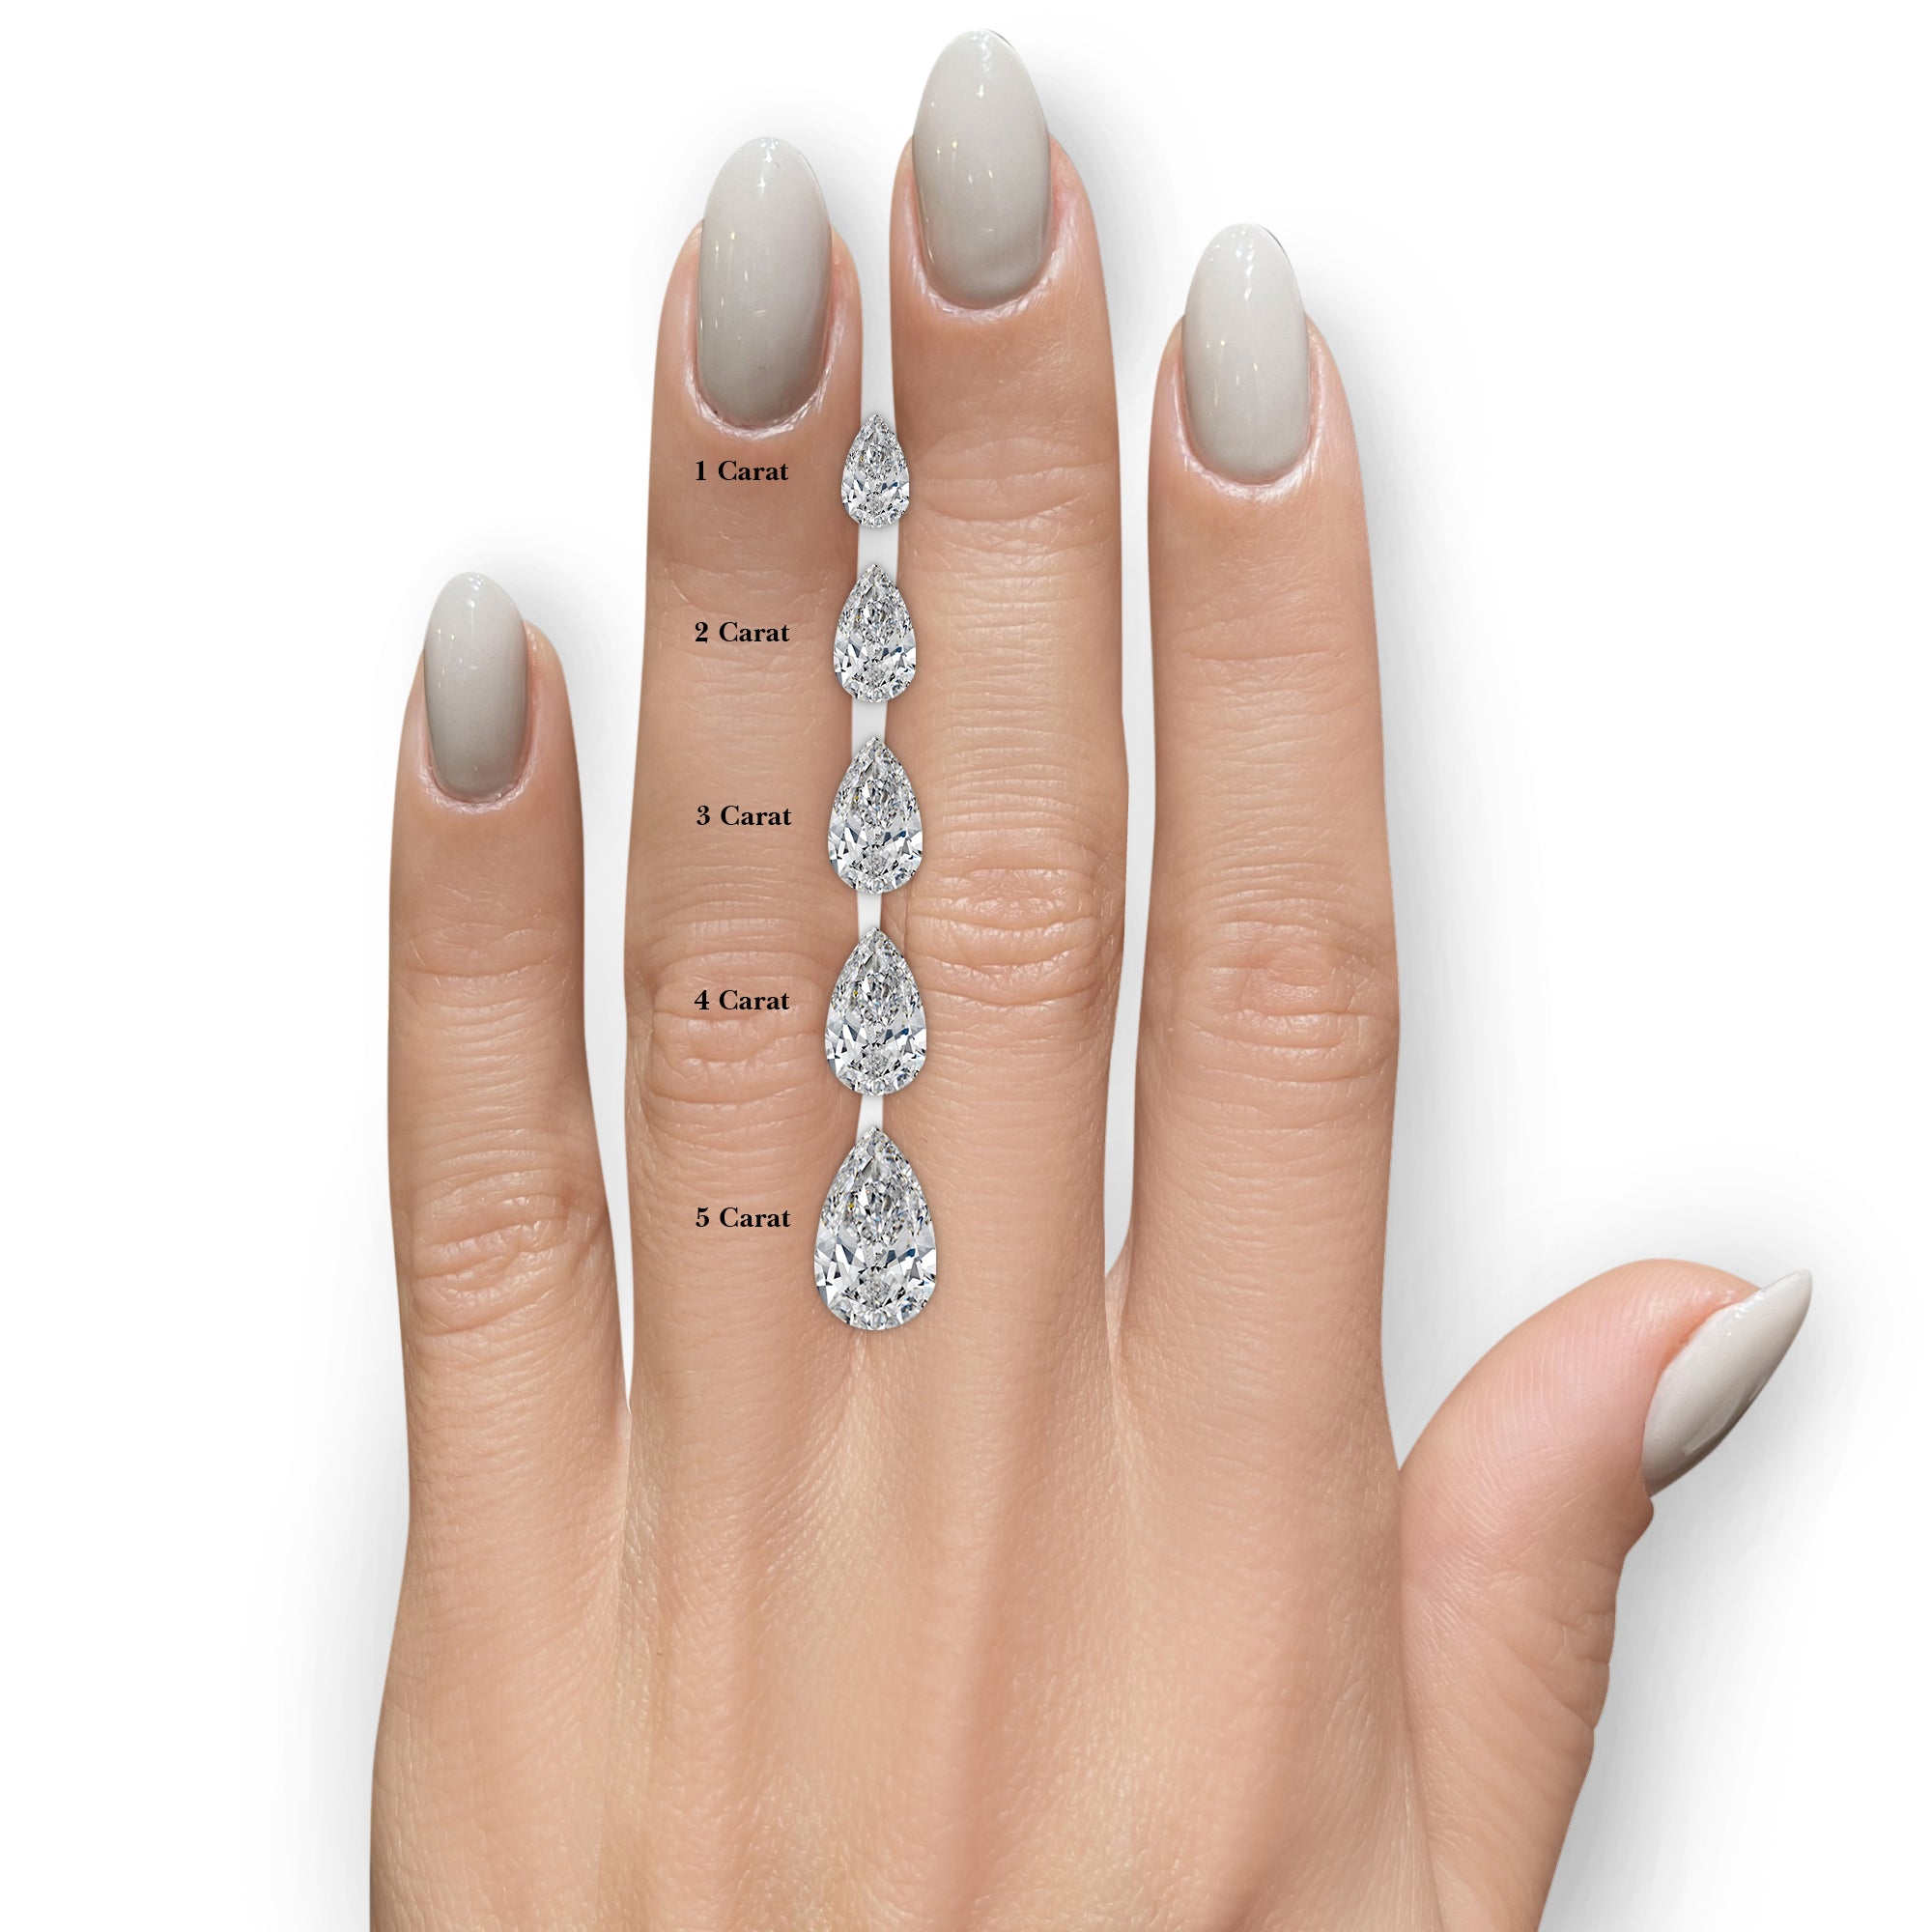 Kamala Diamond Engagement Ring   (5.5 Carat) -14K White Gold